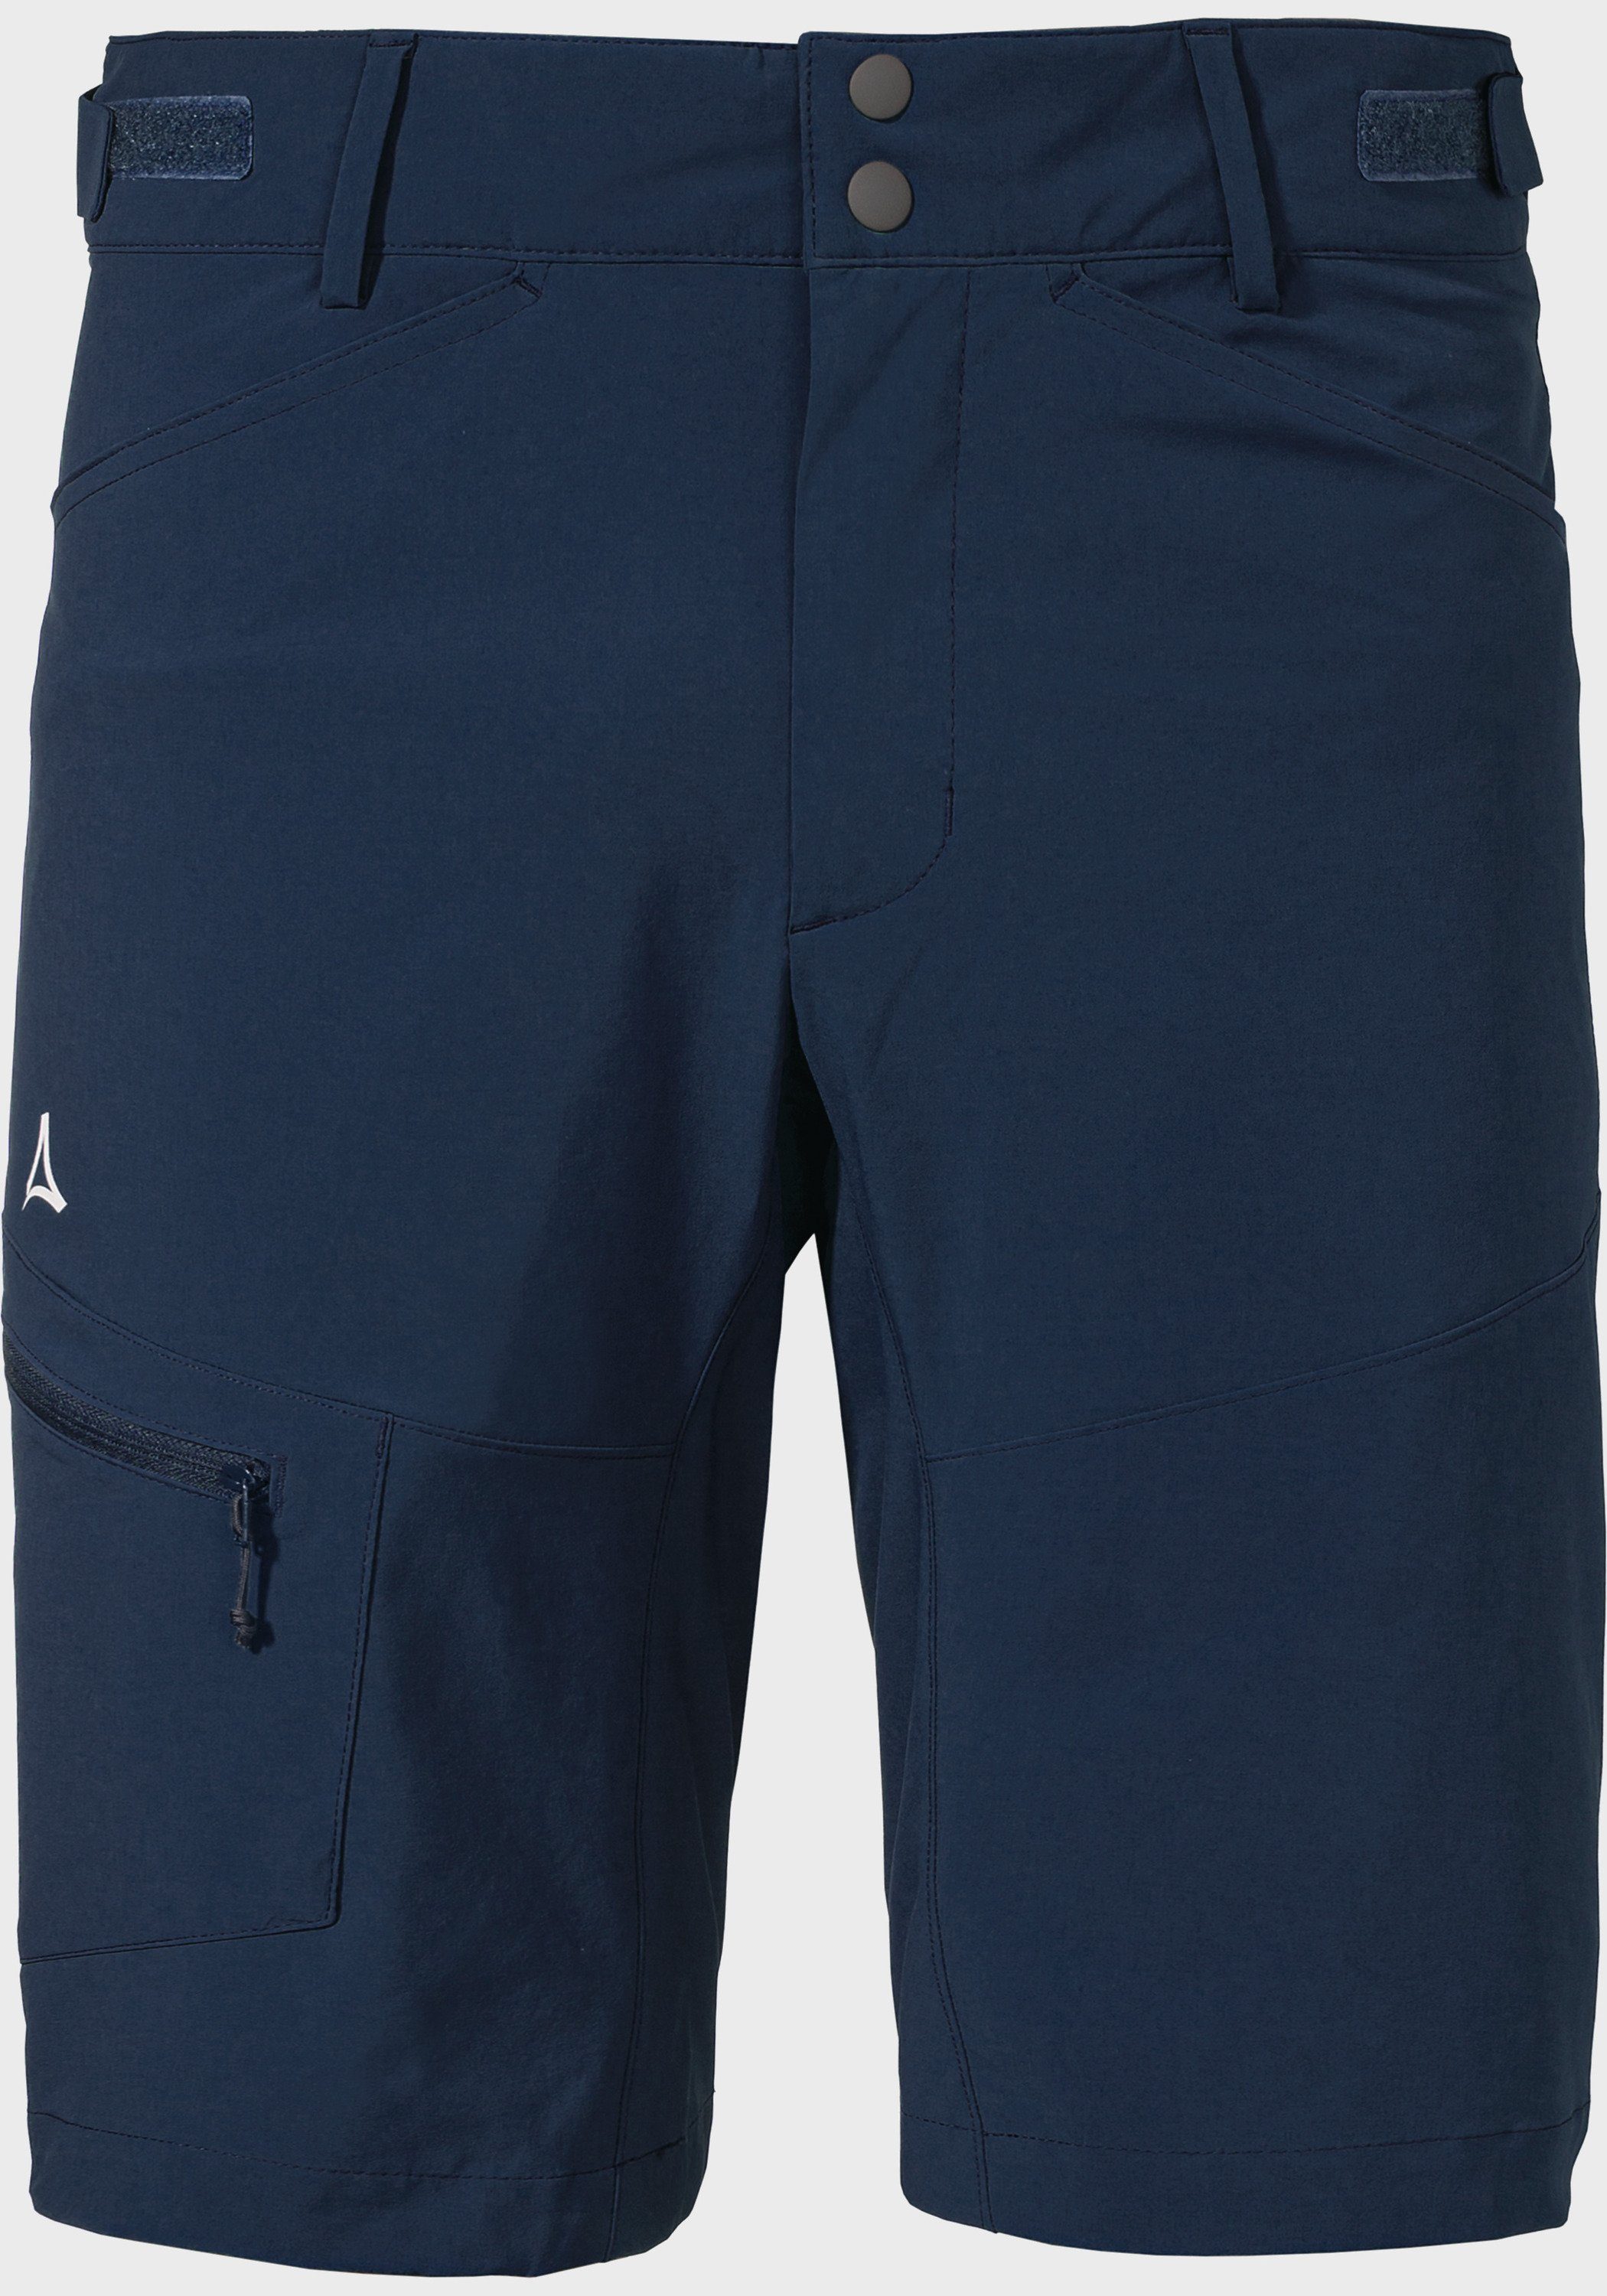 Schöffel Shorts Shorts Algarve M blau | Sportshorts